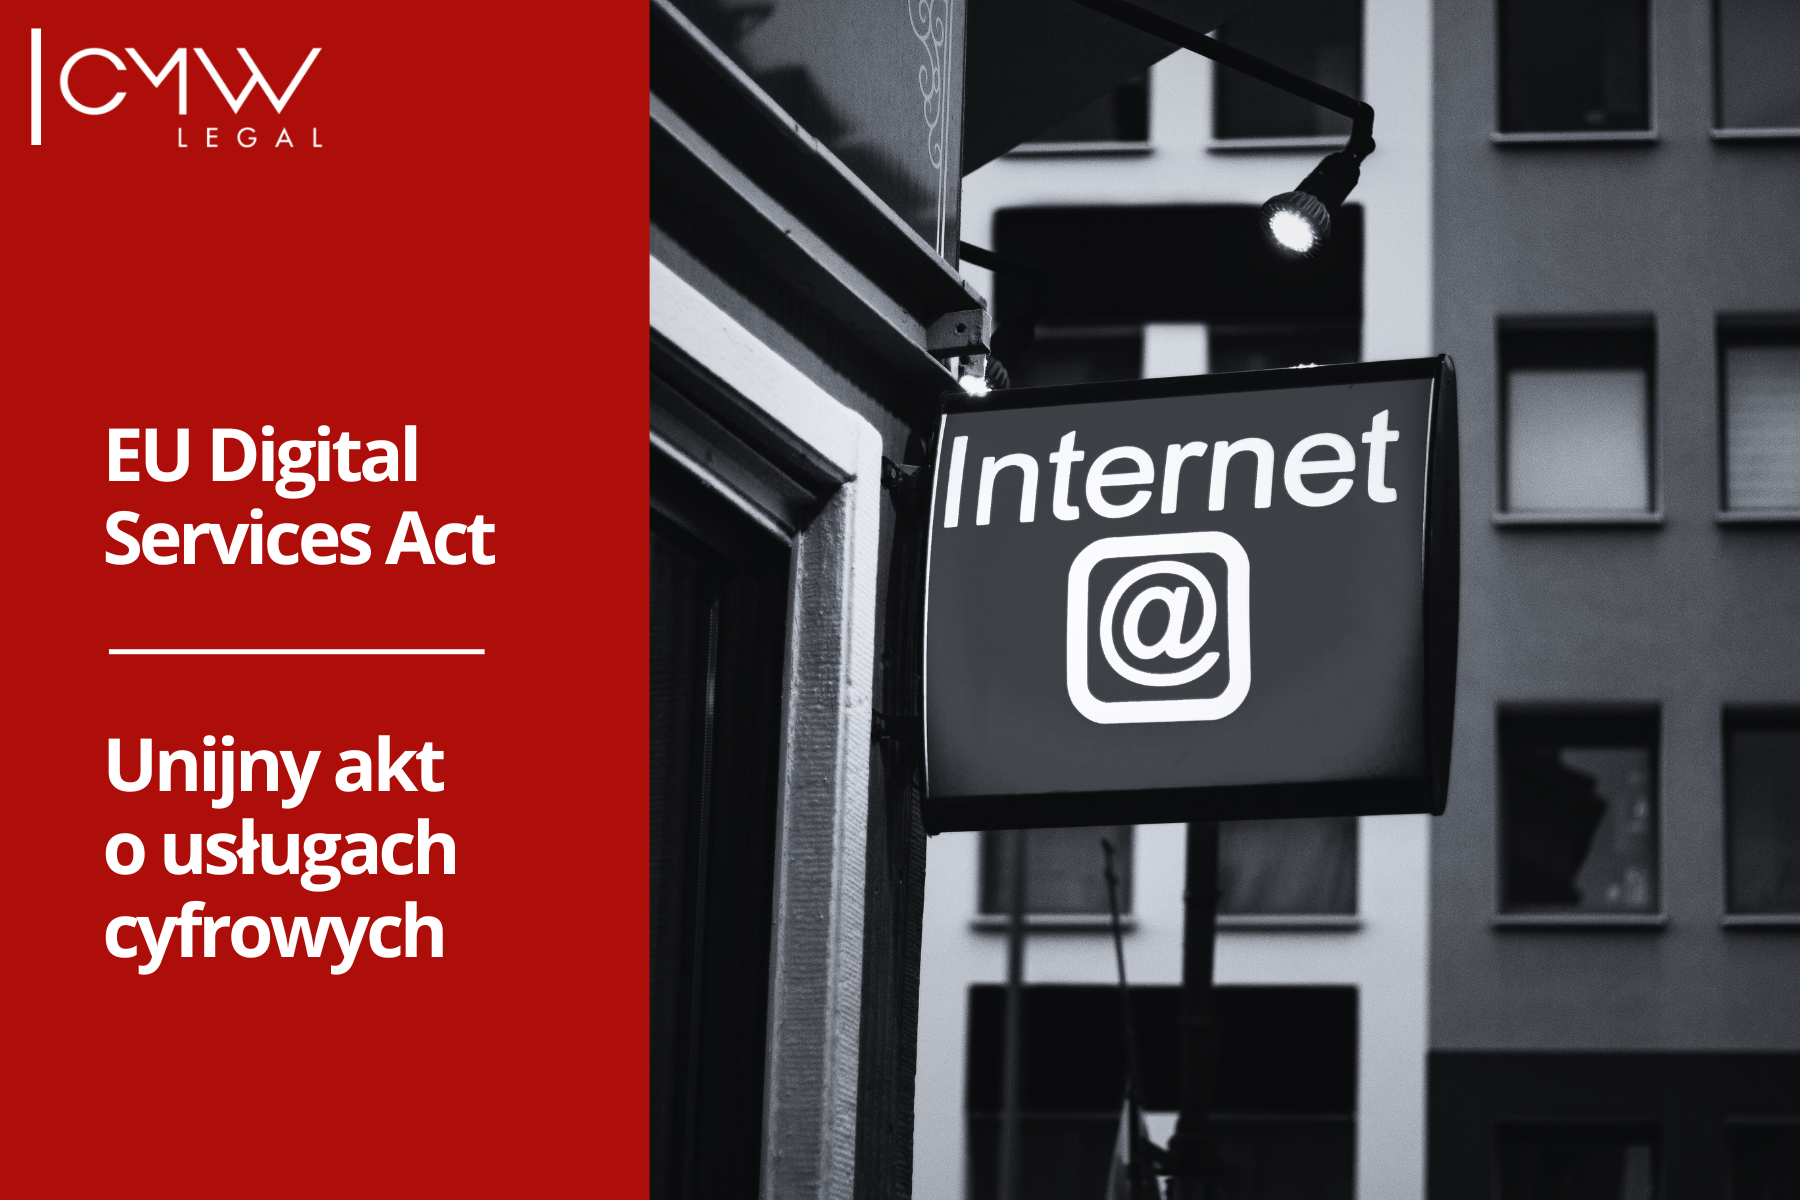  EU Digital Services Act is enforced